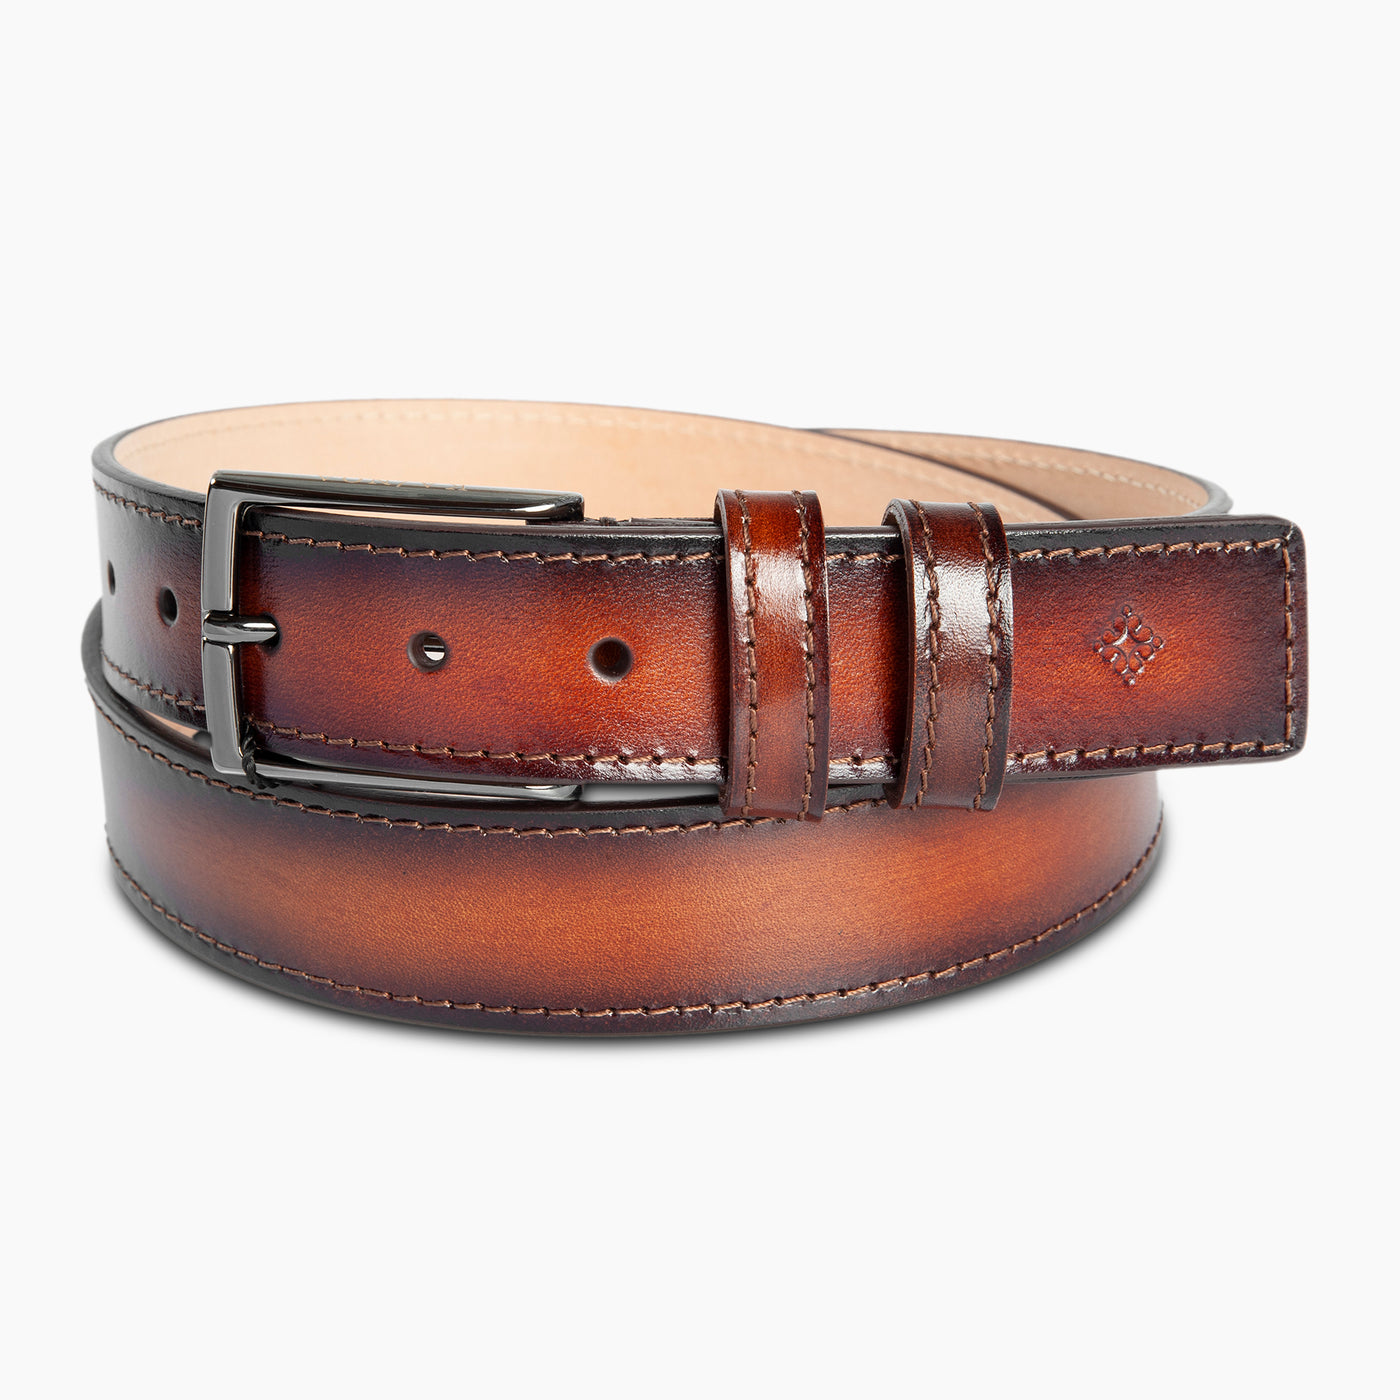 Kurt buffed hand-dyed and coloured leather belt